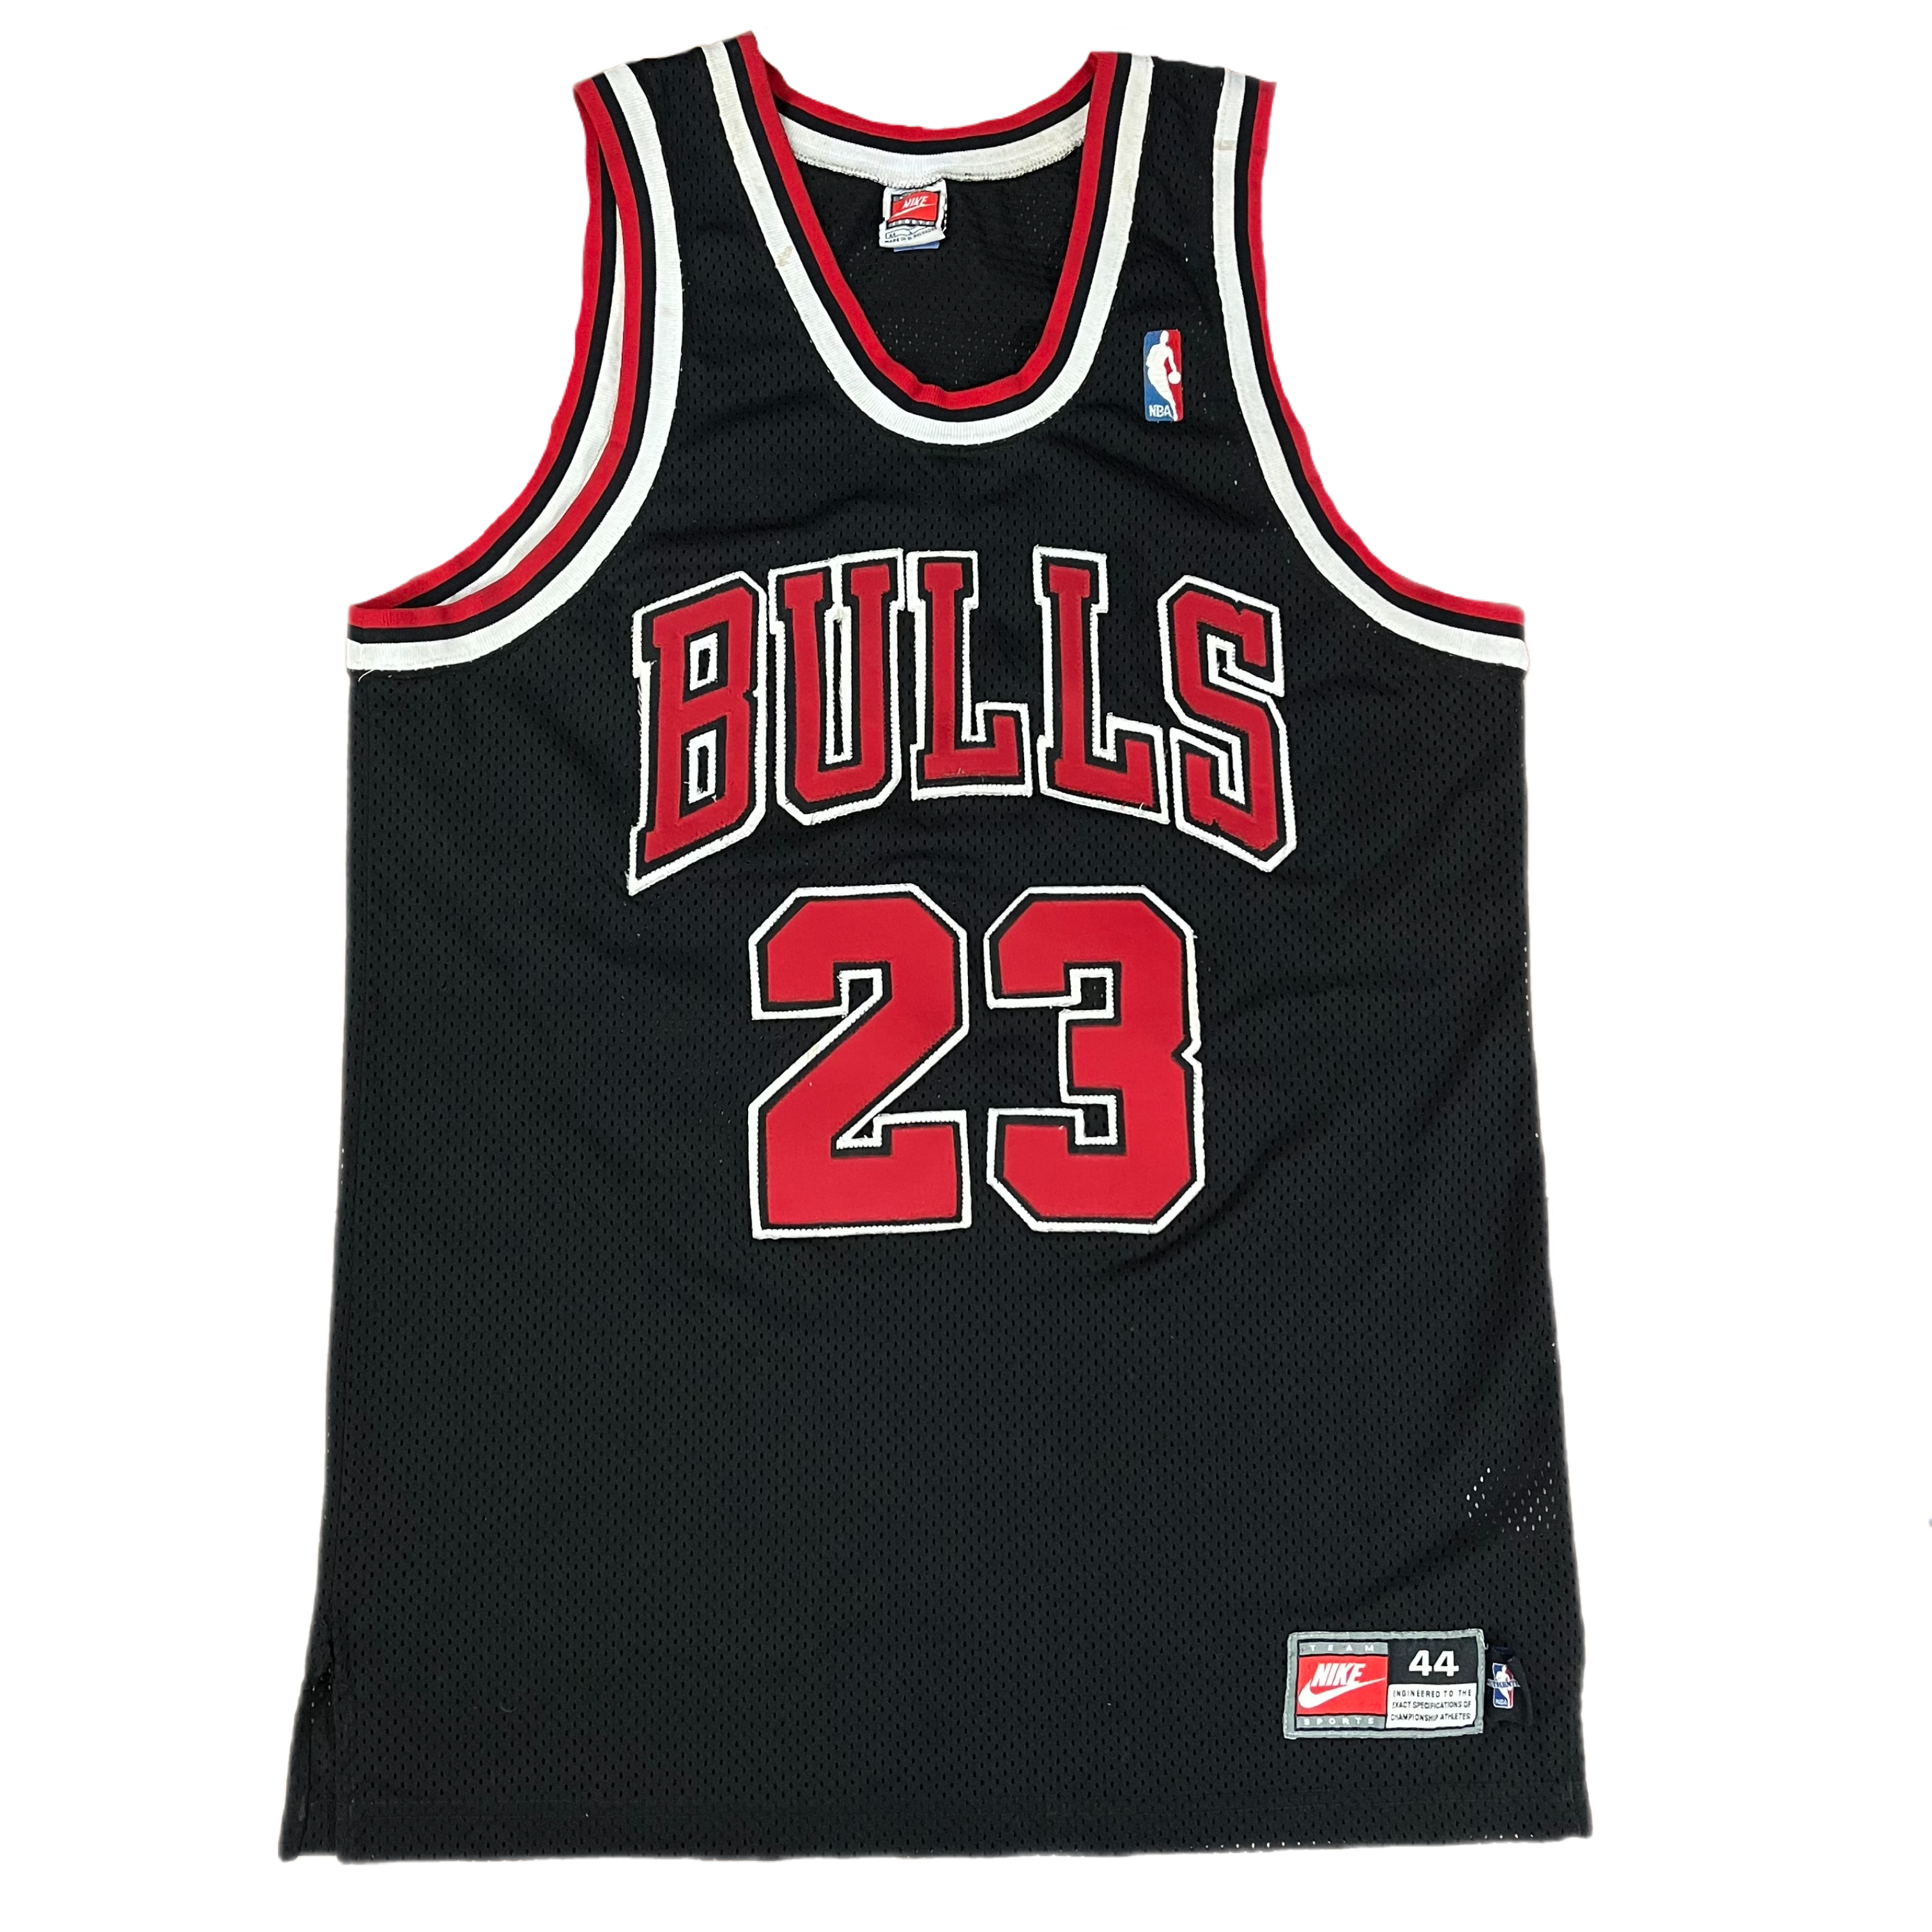 Vintage Nike Team Sports Chicago Bulls "Michael #23" Basketball Jersey jointcustodydc